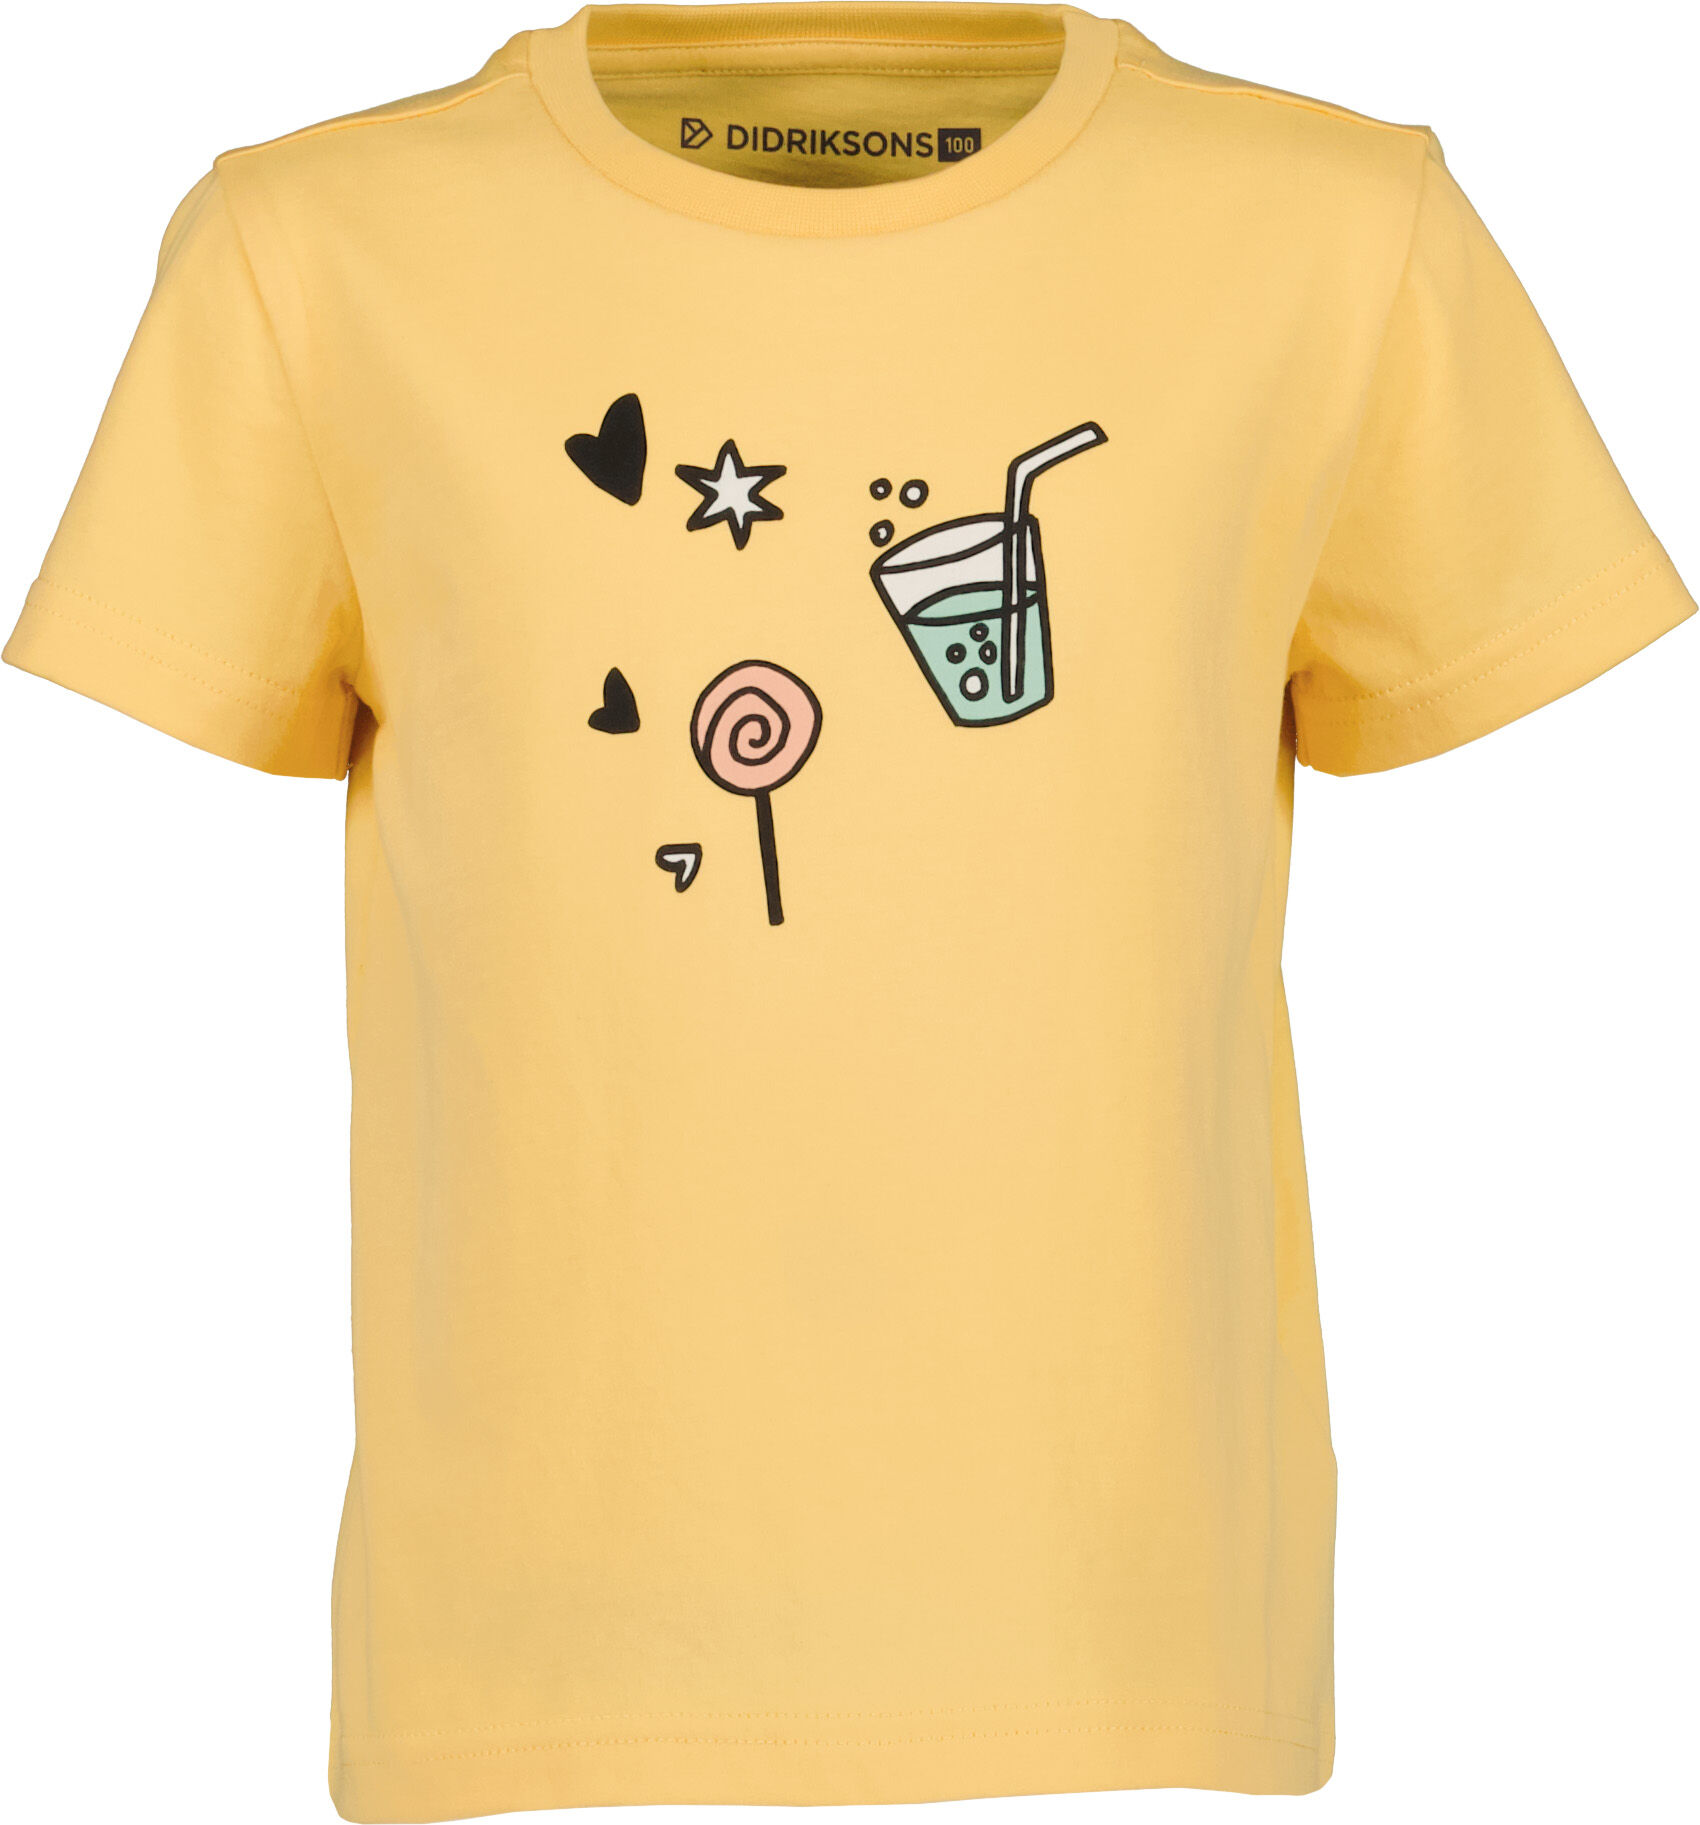 Didriksons Mynta T-shirt Creamy Yellow 120